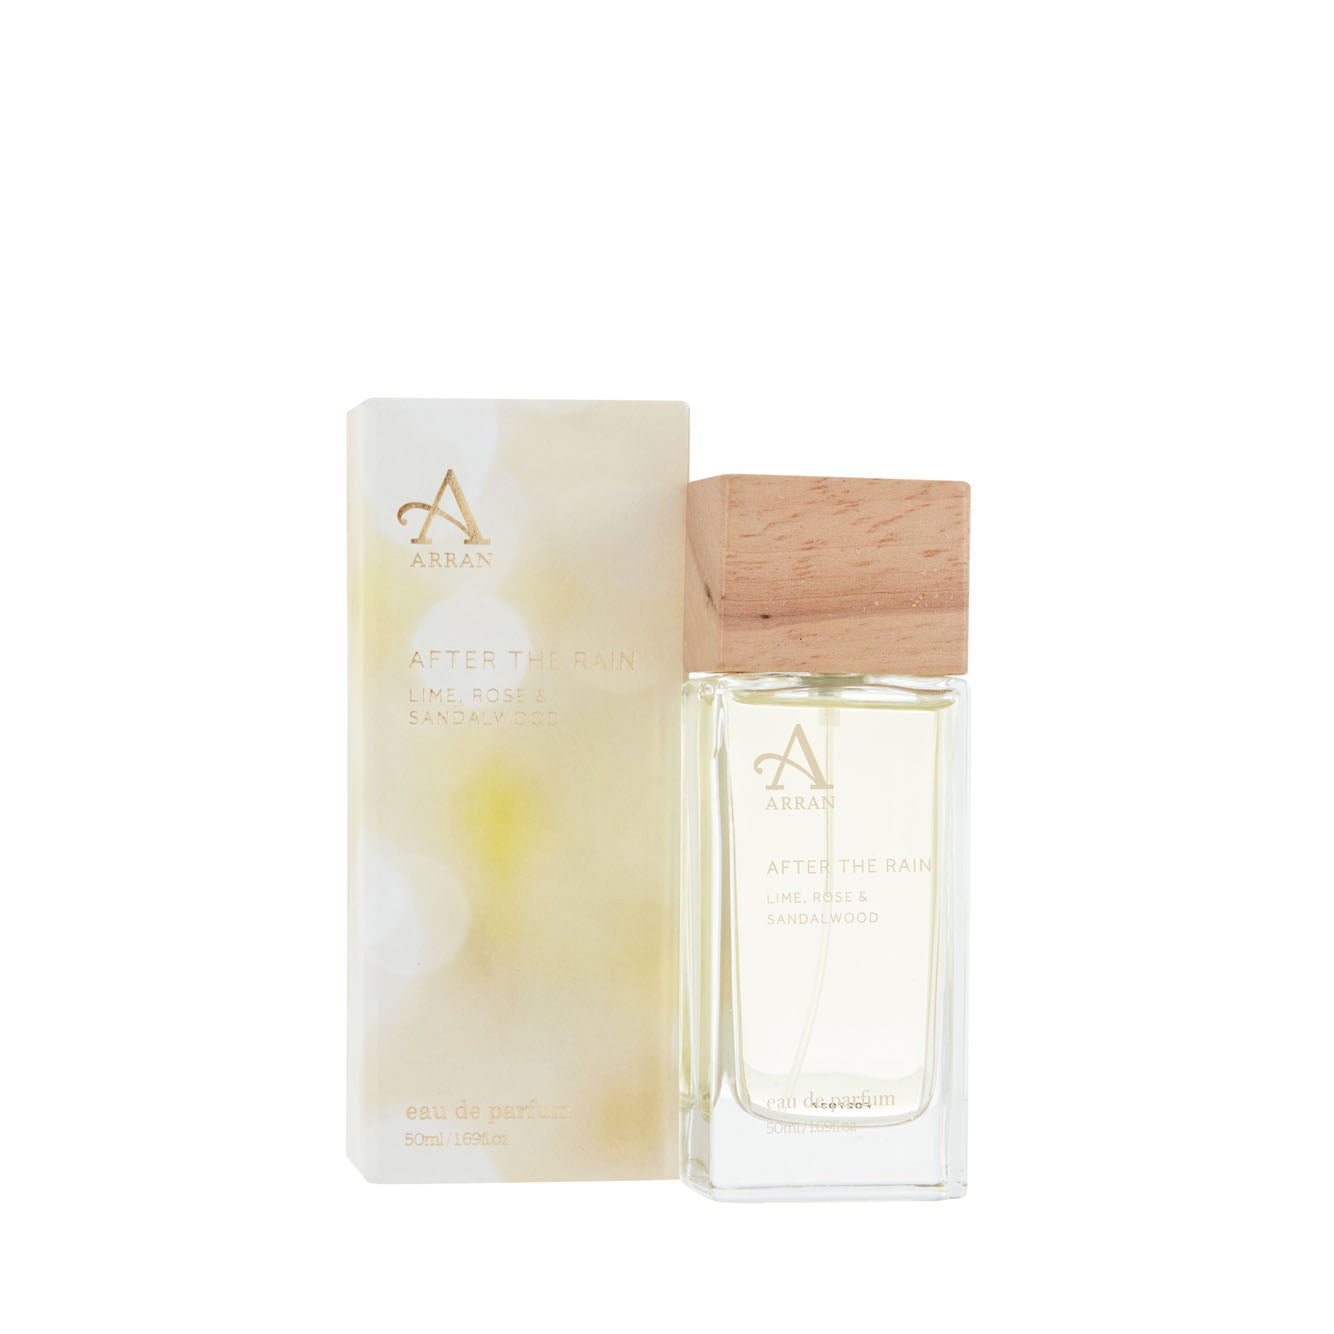 An image of ARRAN After the Rain 50ml Eau De Parfum | Made in Scotland | Lime, Rose & Sandal...